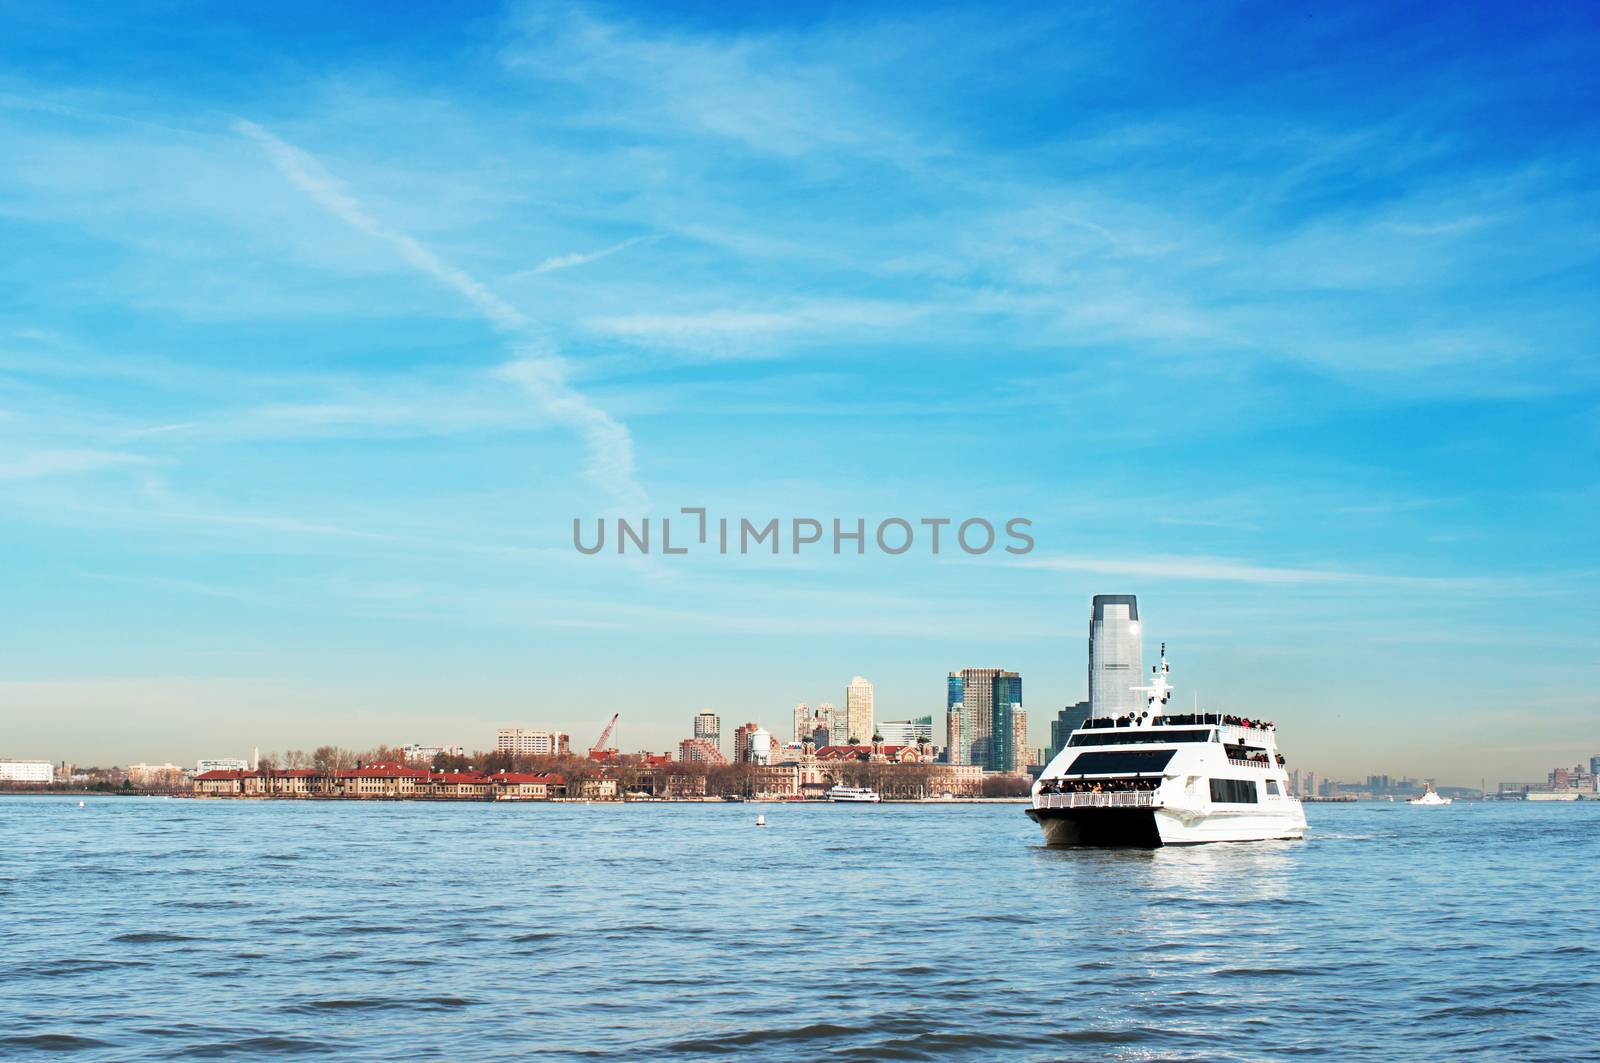  Luxury yacht transporting passengers on Hudson river New York by daoleduc